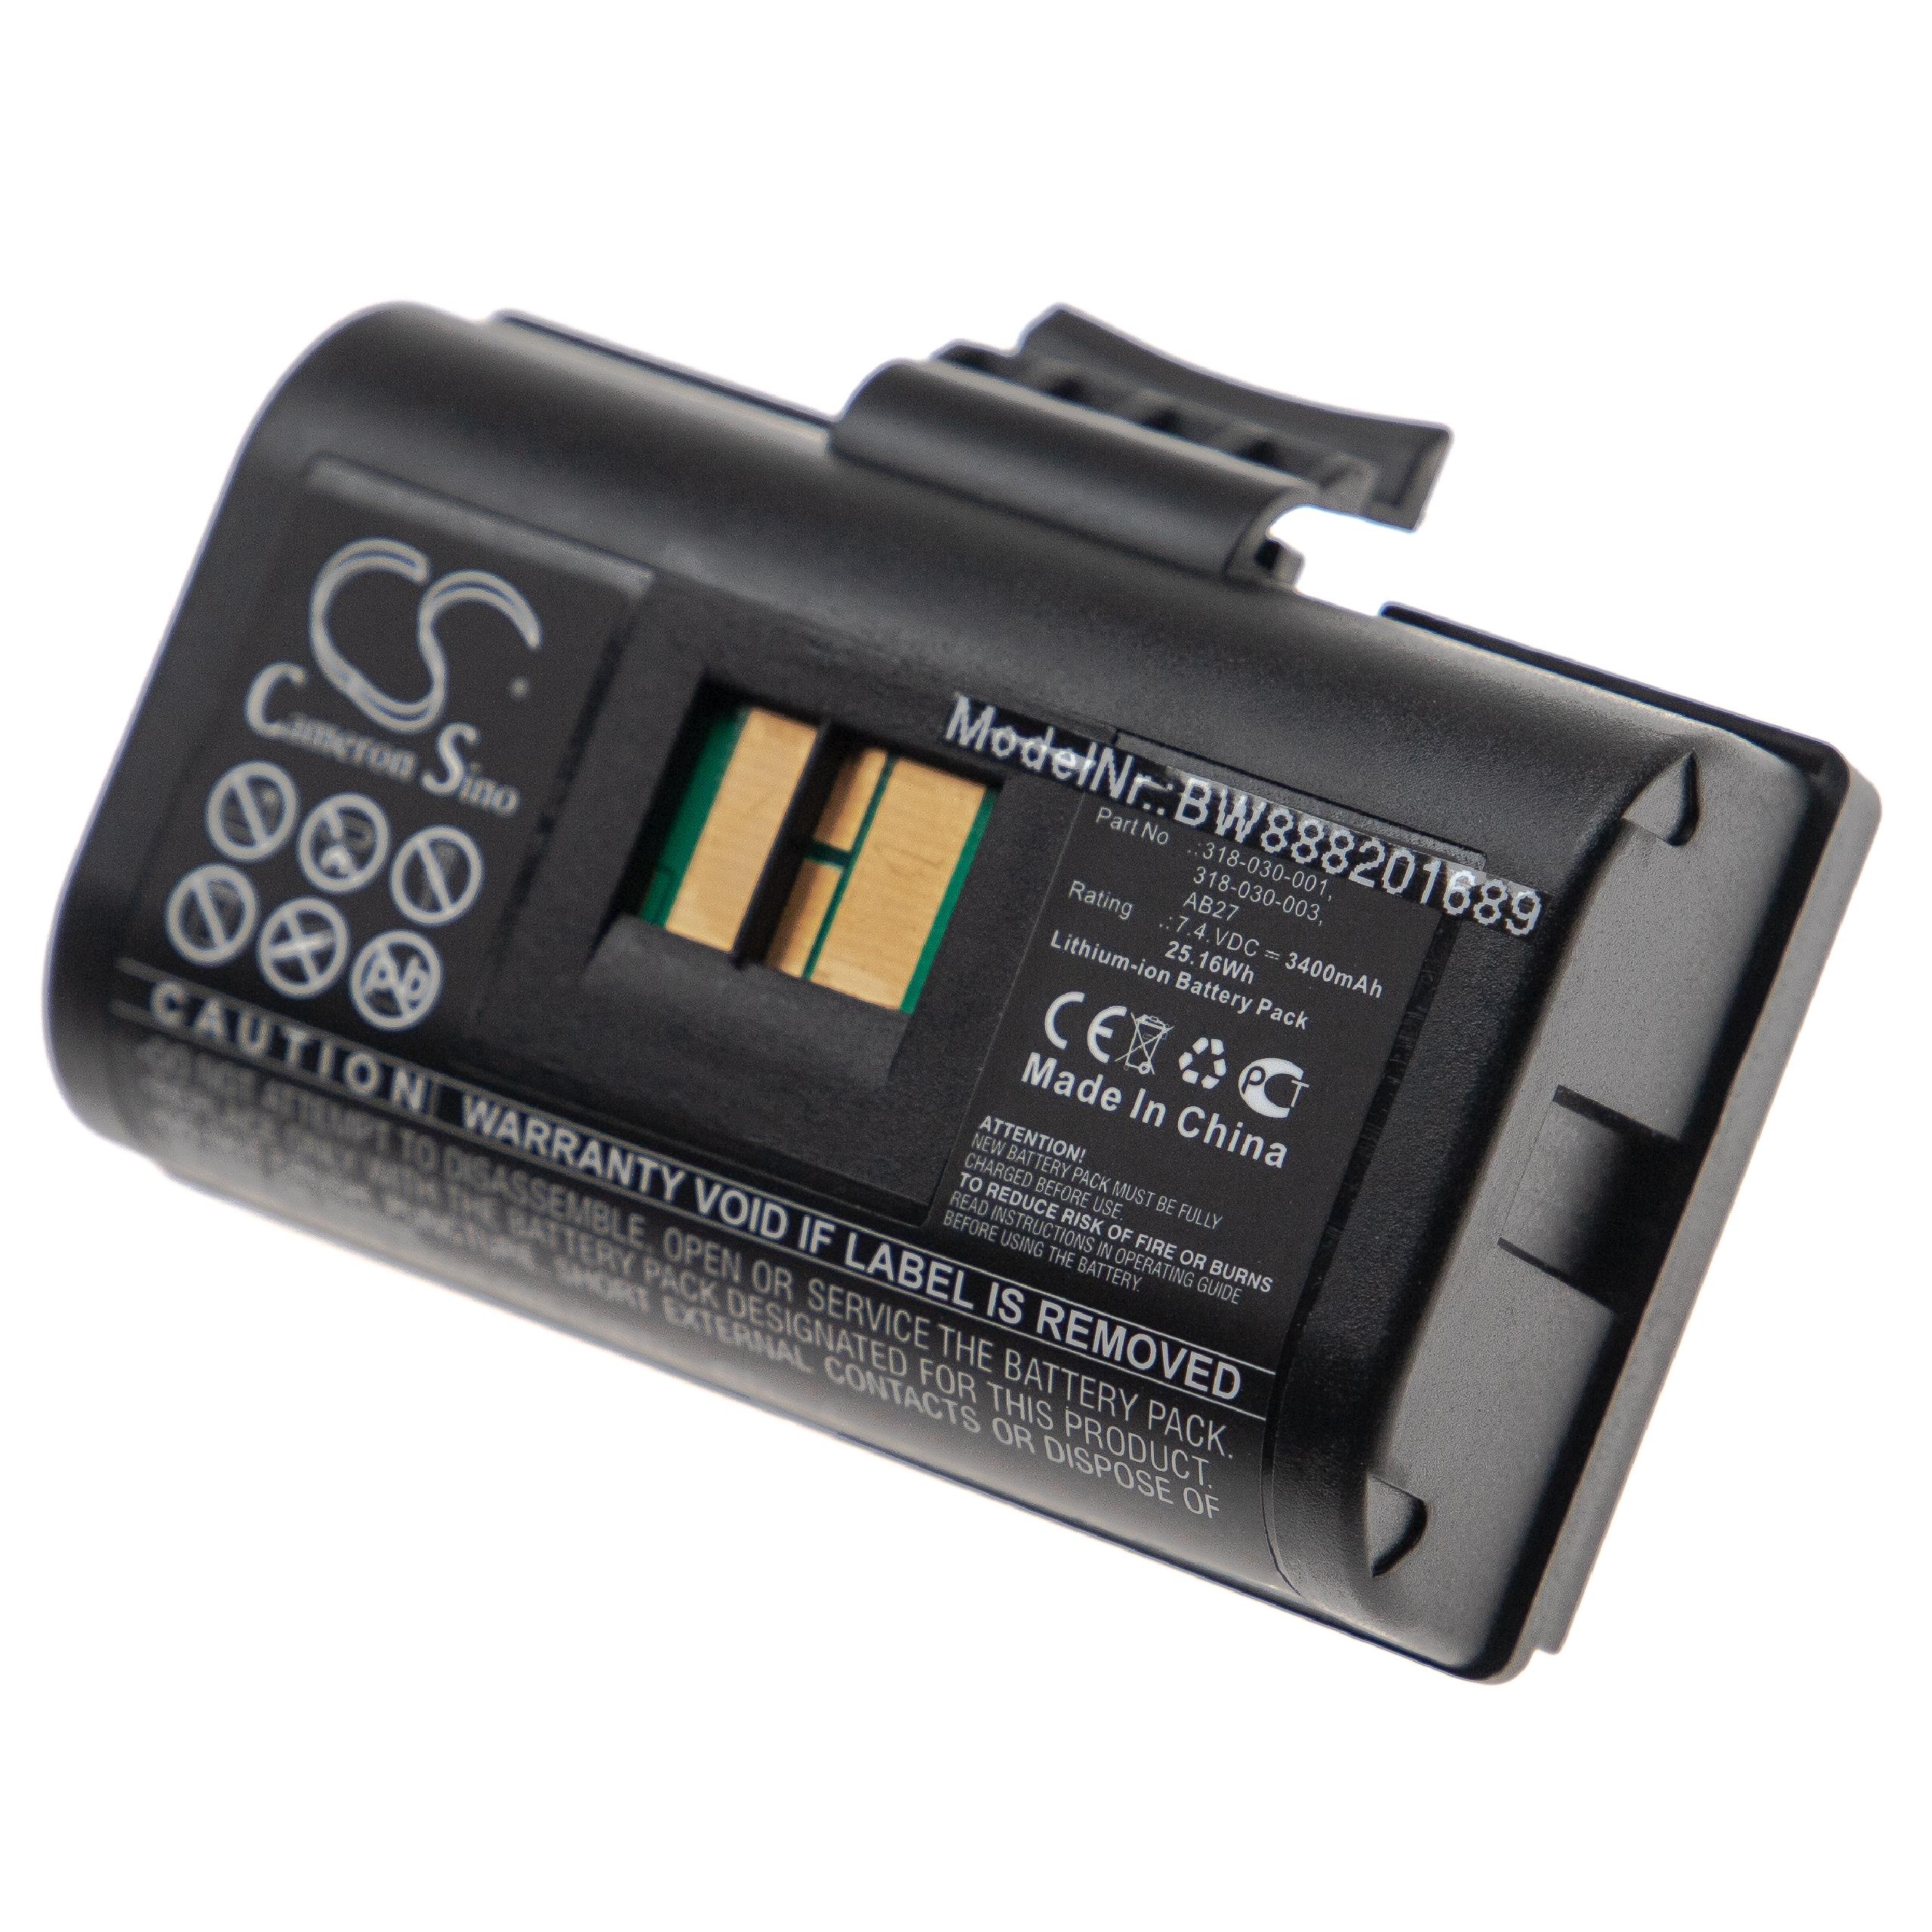 Batteria per stampante sostituisce Intermec 318-030-001, 318-030-003, AB27 Intermec - 3400mAh 7,4V Li-Ion